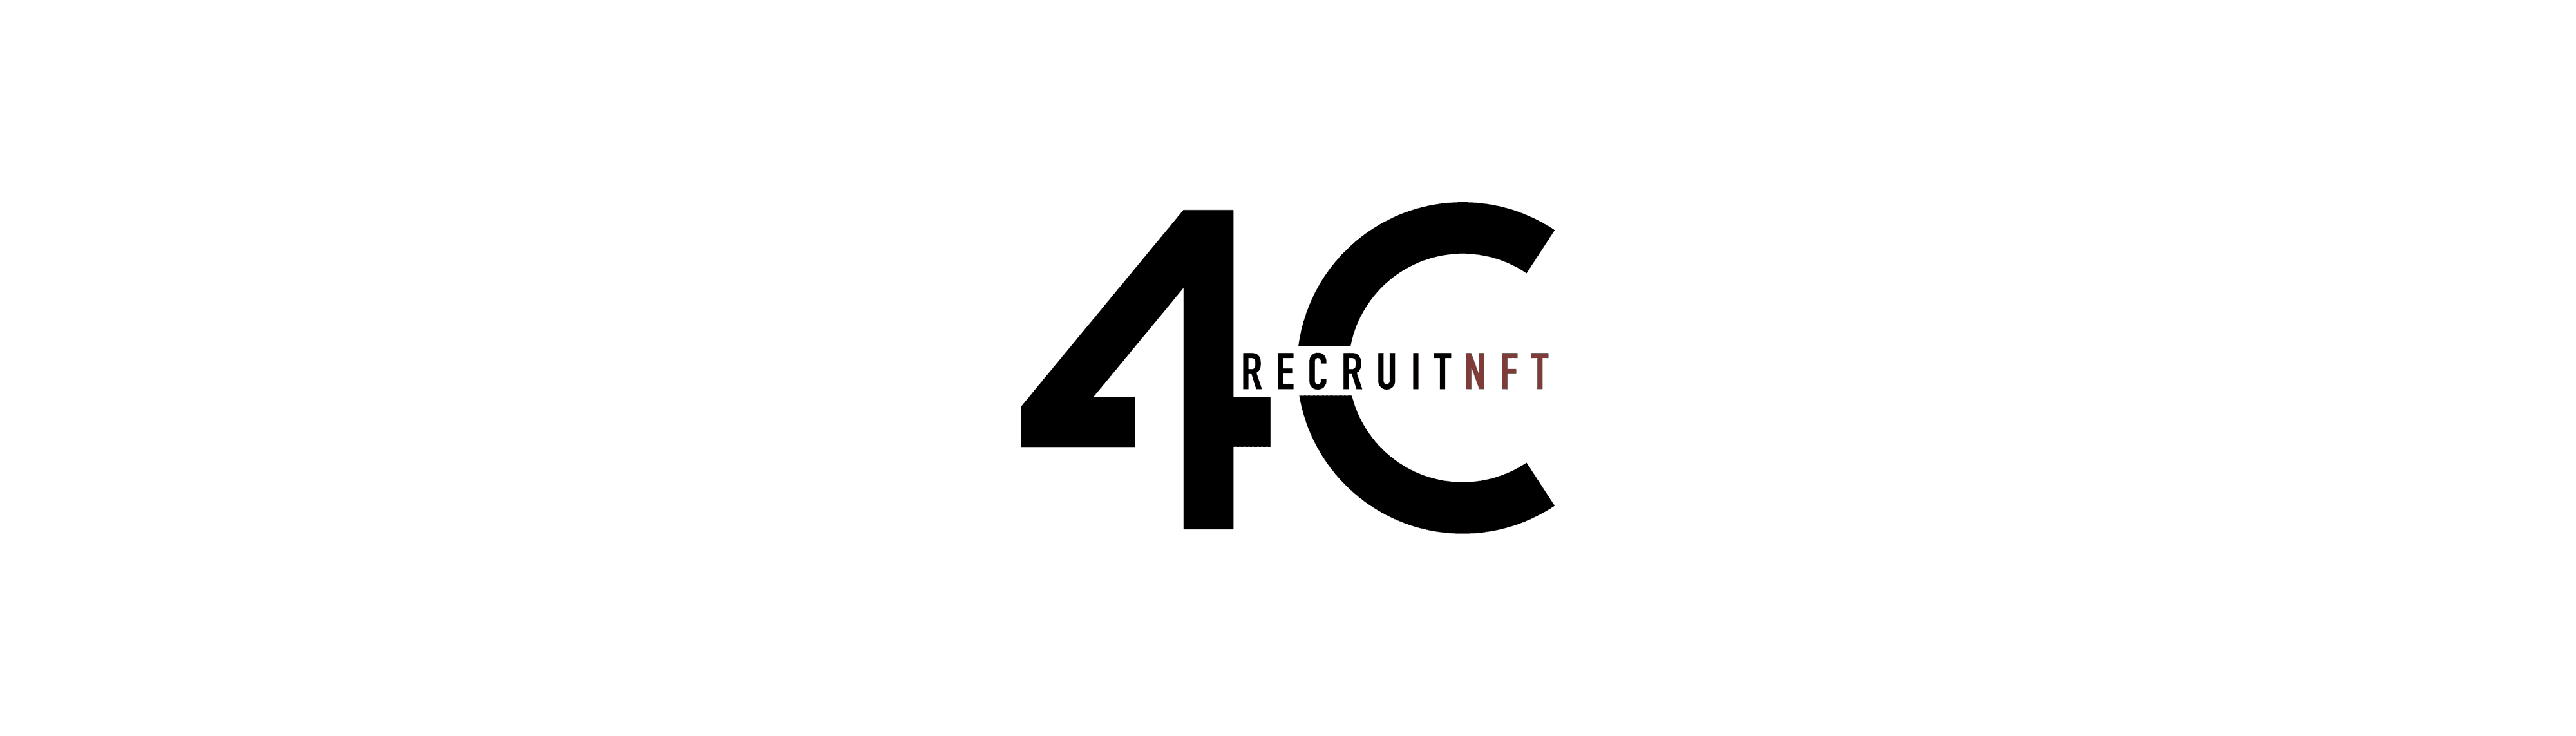 4crecruiting